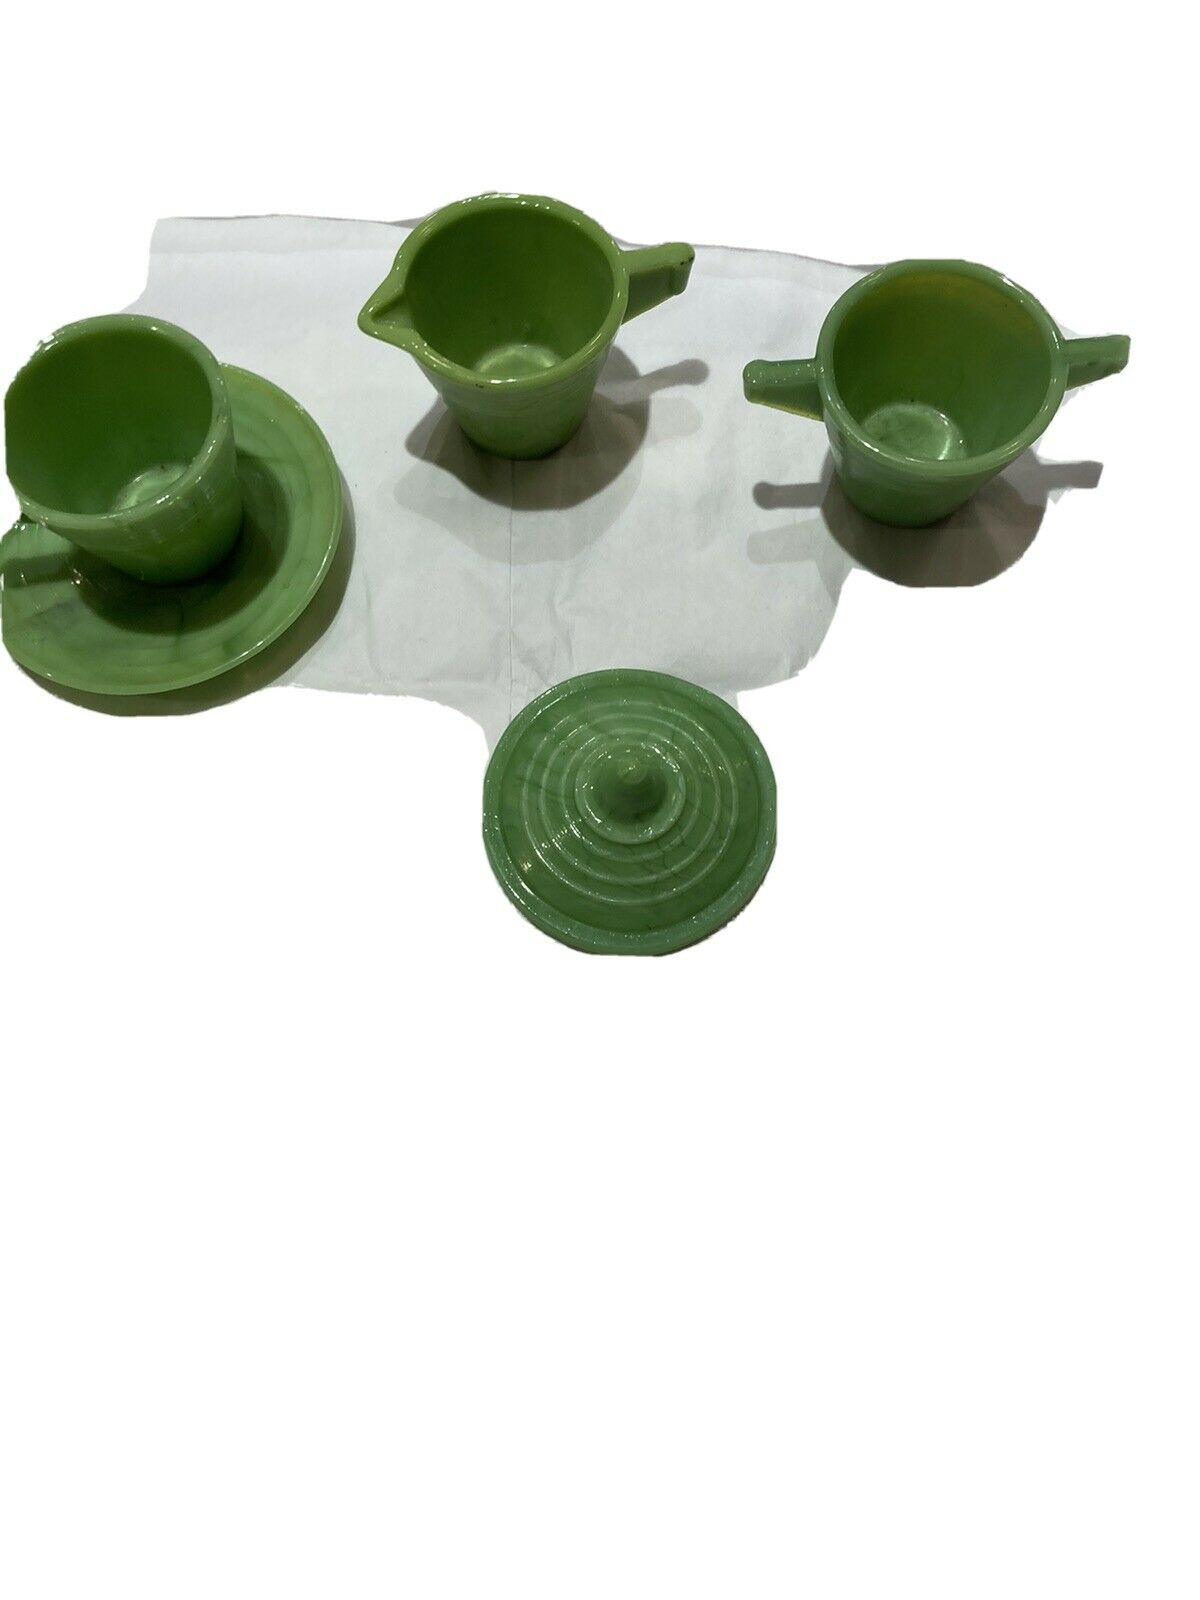 Vintage Akro Agate Green Jadeite Child's Tea Set Lot Of Five Pieces!